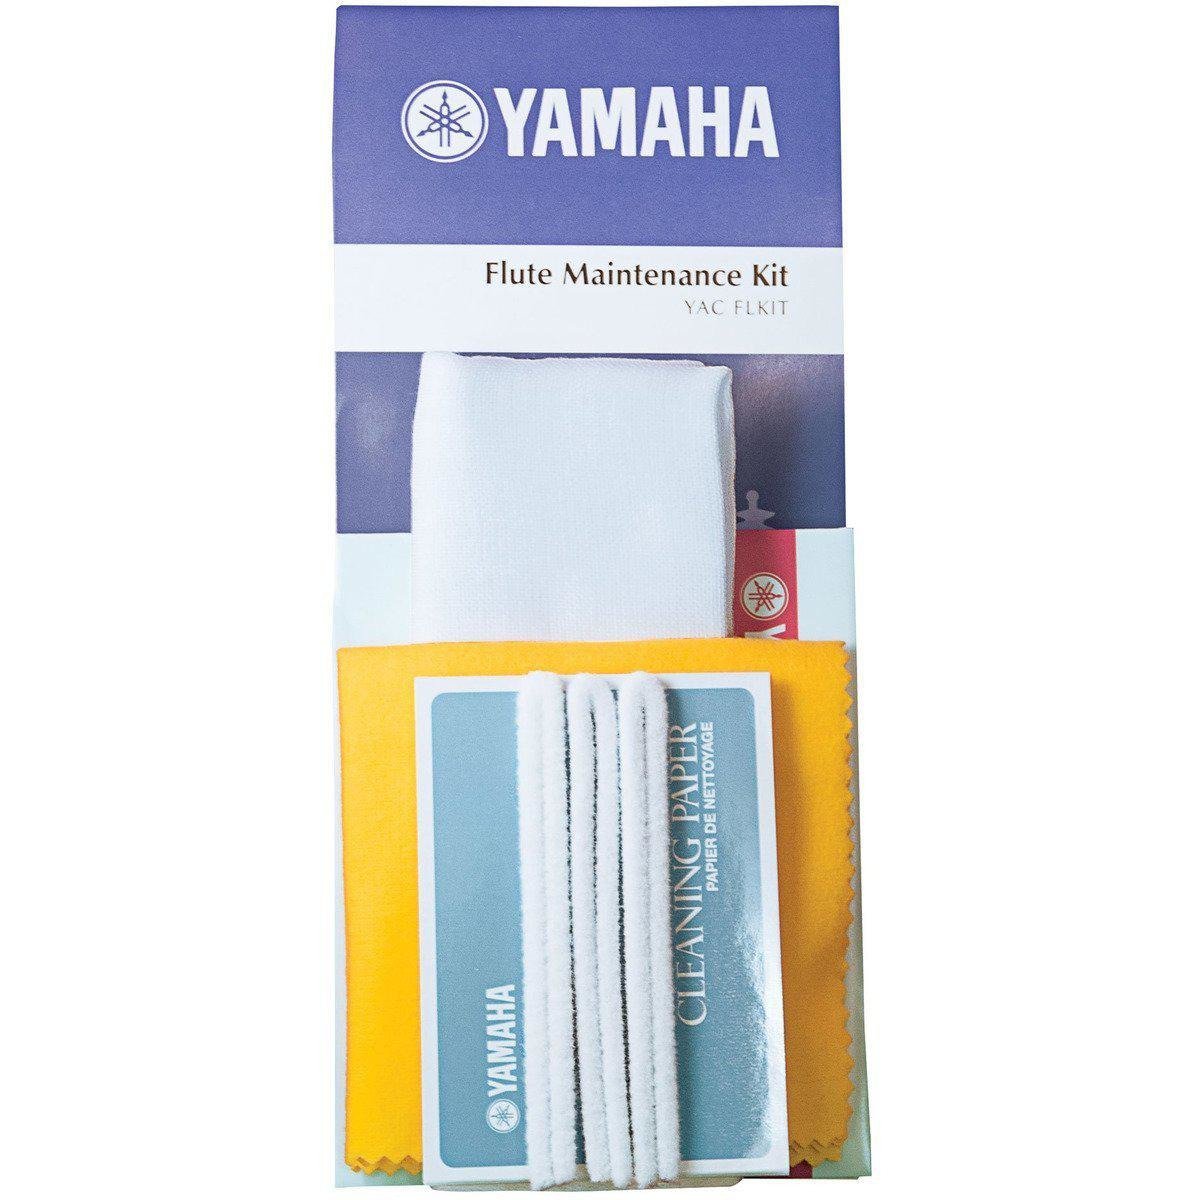 Yamaha Flute Maintenance Kit YACFLKIT-Andy's Music